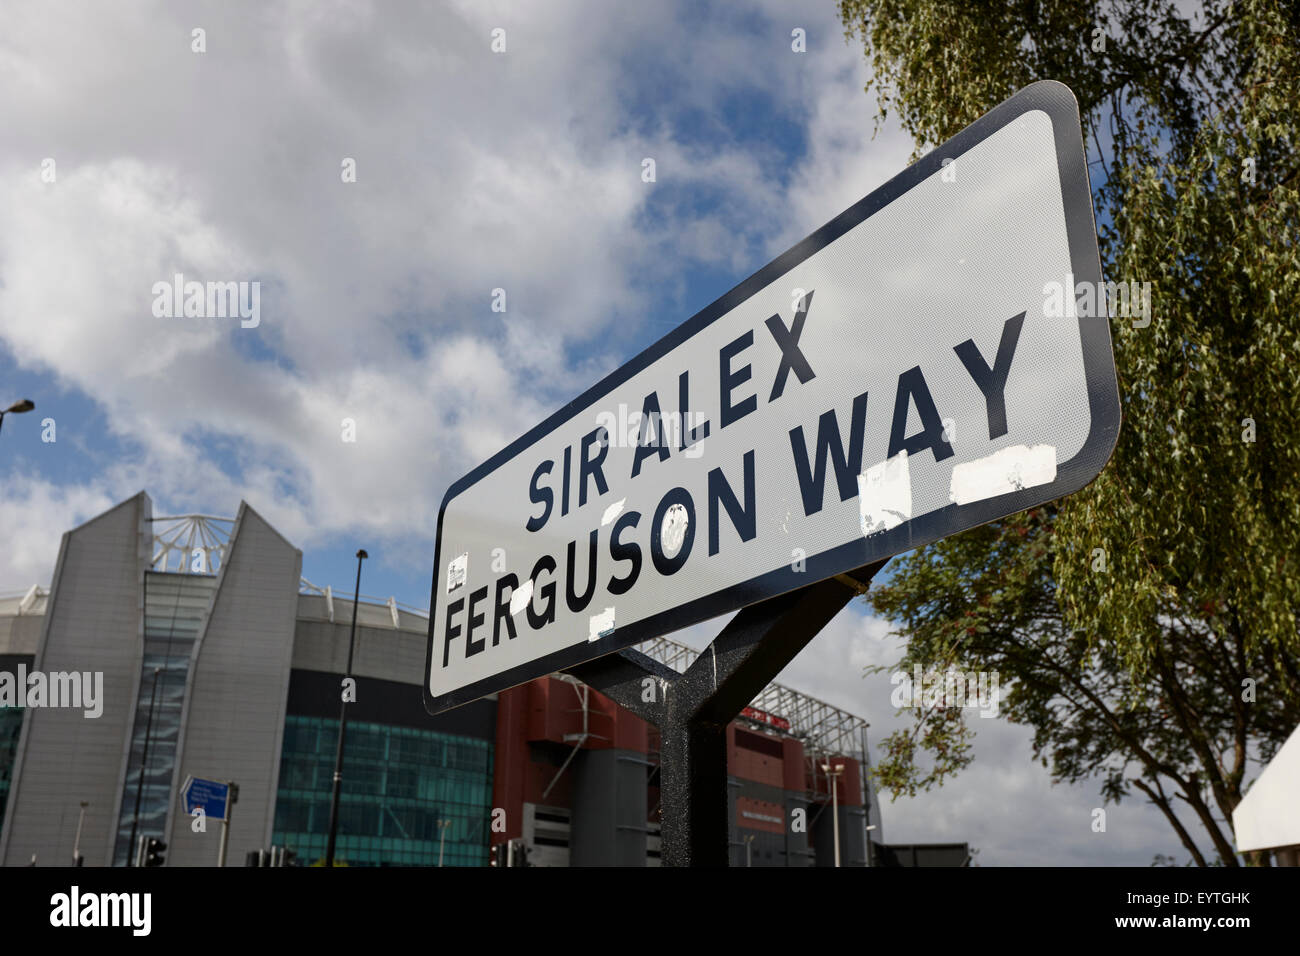 sir alex ferguson way old trafford Manchester uk Stock Photo